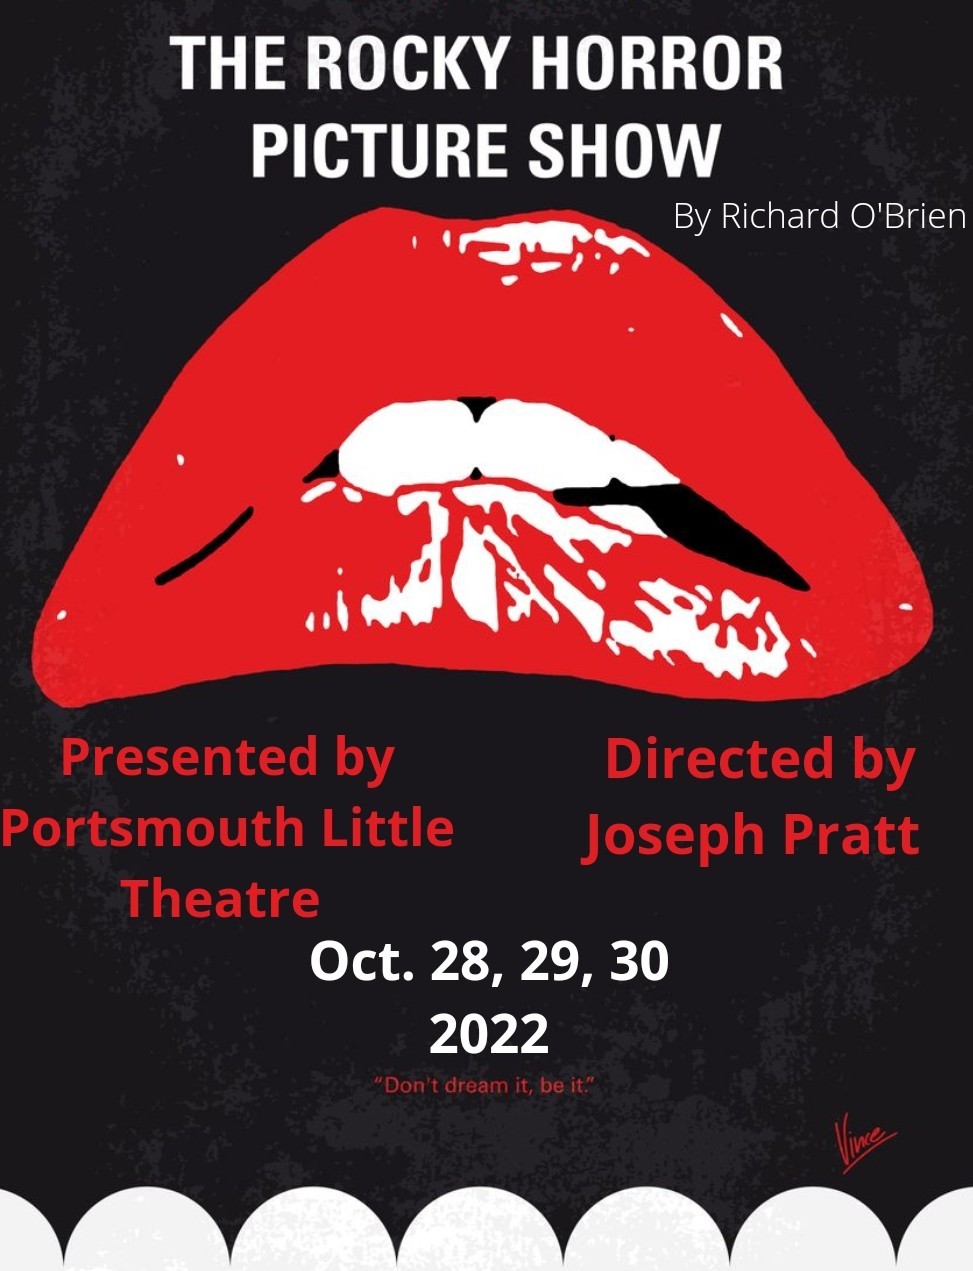 Rocky Horror Picture Show  on oct. 29, 19:30@Portsmouth Little Theatre - Elegir asientoCompra entradas y obtén información enPortsmouth Little Theatre 